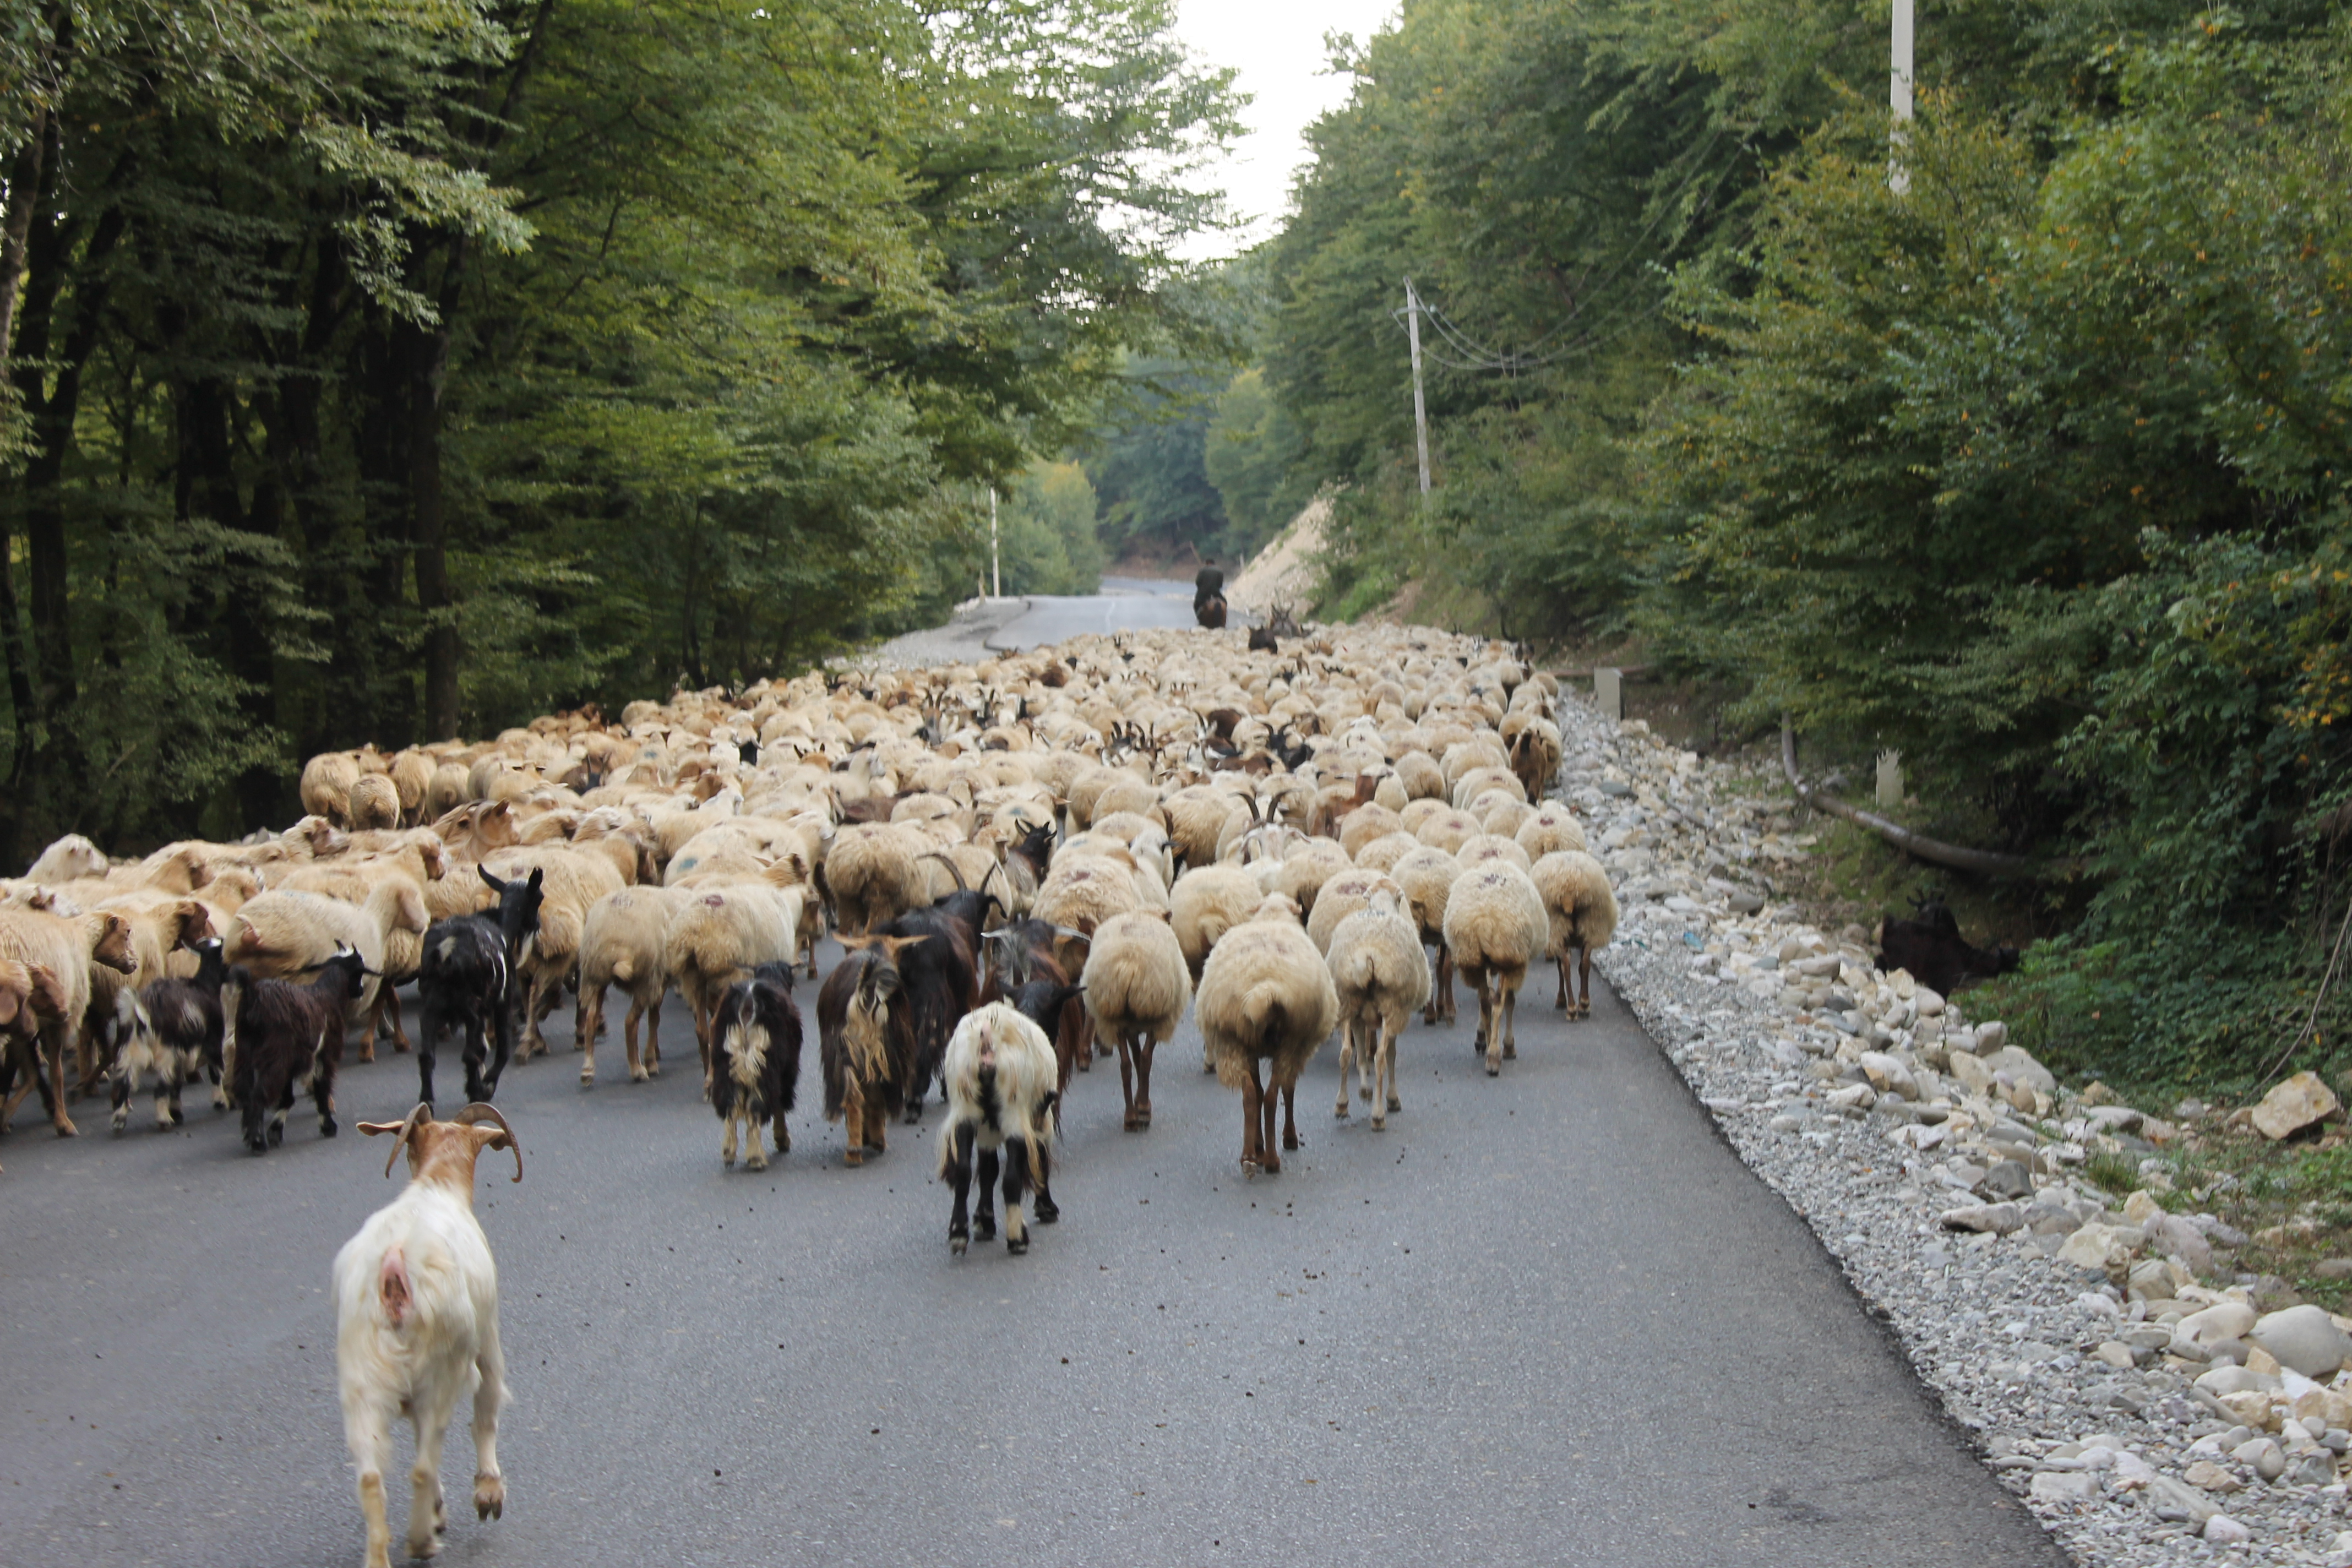 Sheep - common road users in Azerbaijan. Image credit